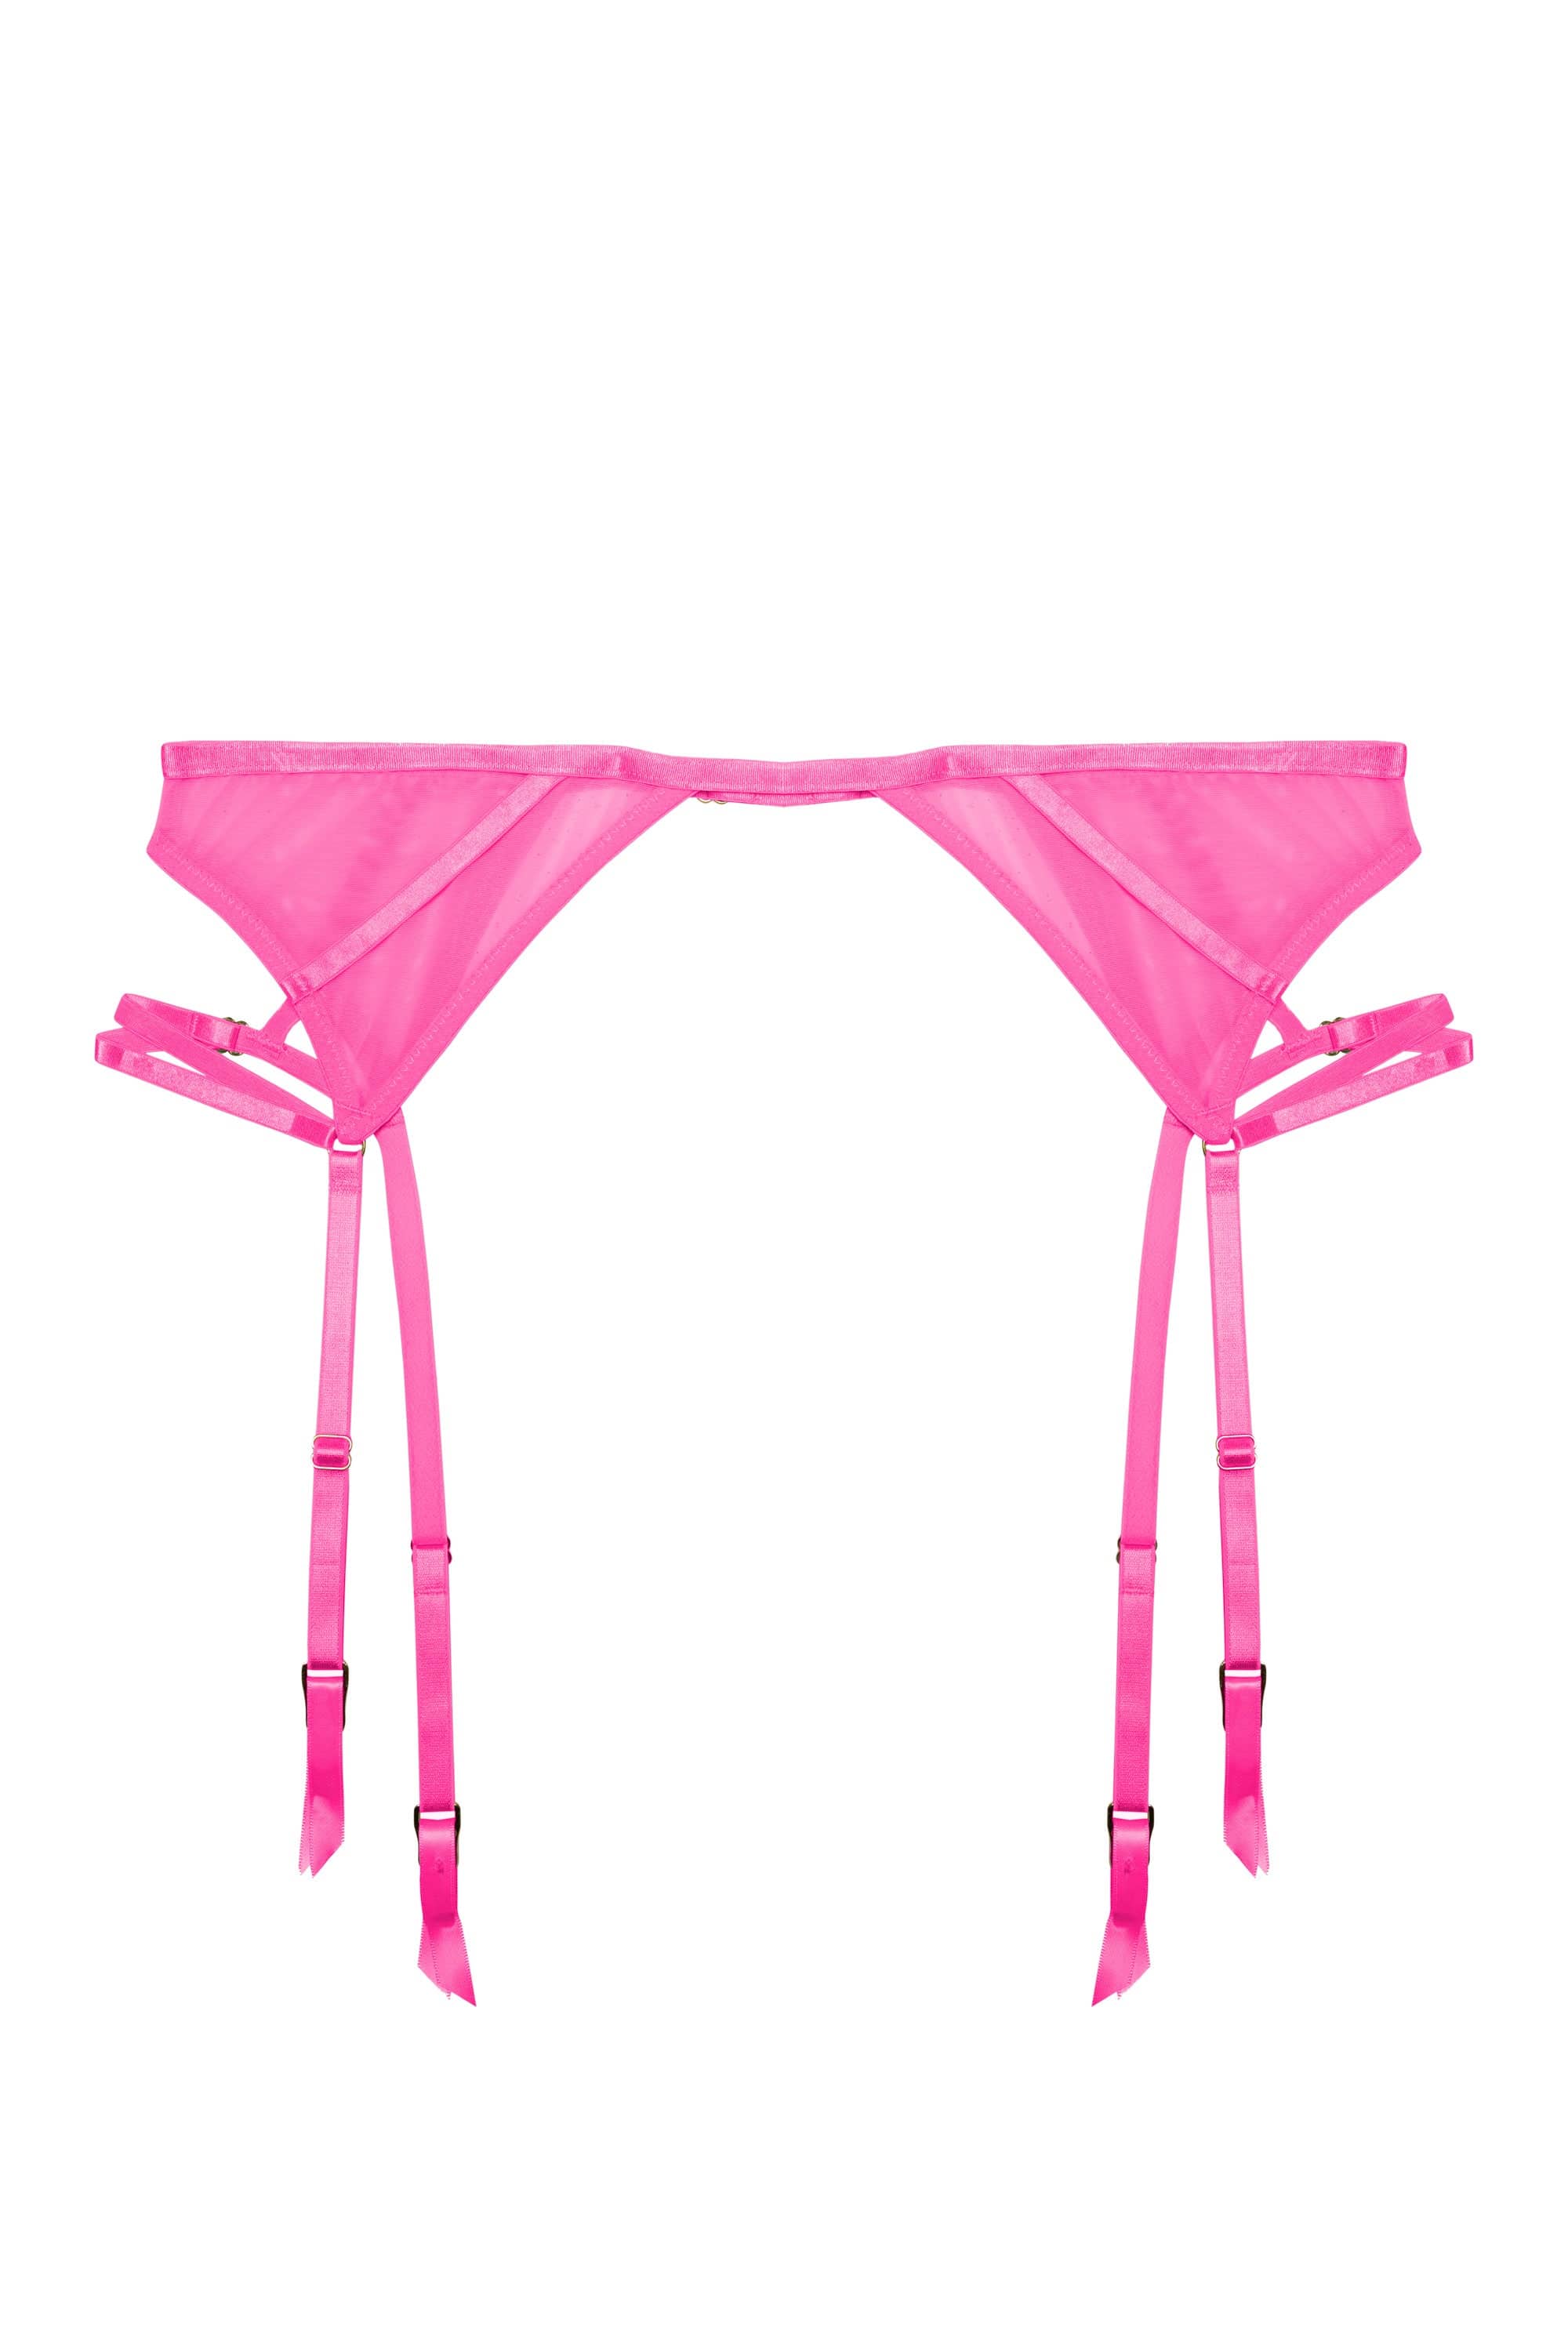 Rosalyn Lingerie Sets in Neon Pink Lace, White Mesh Garter Belt